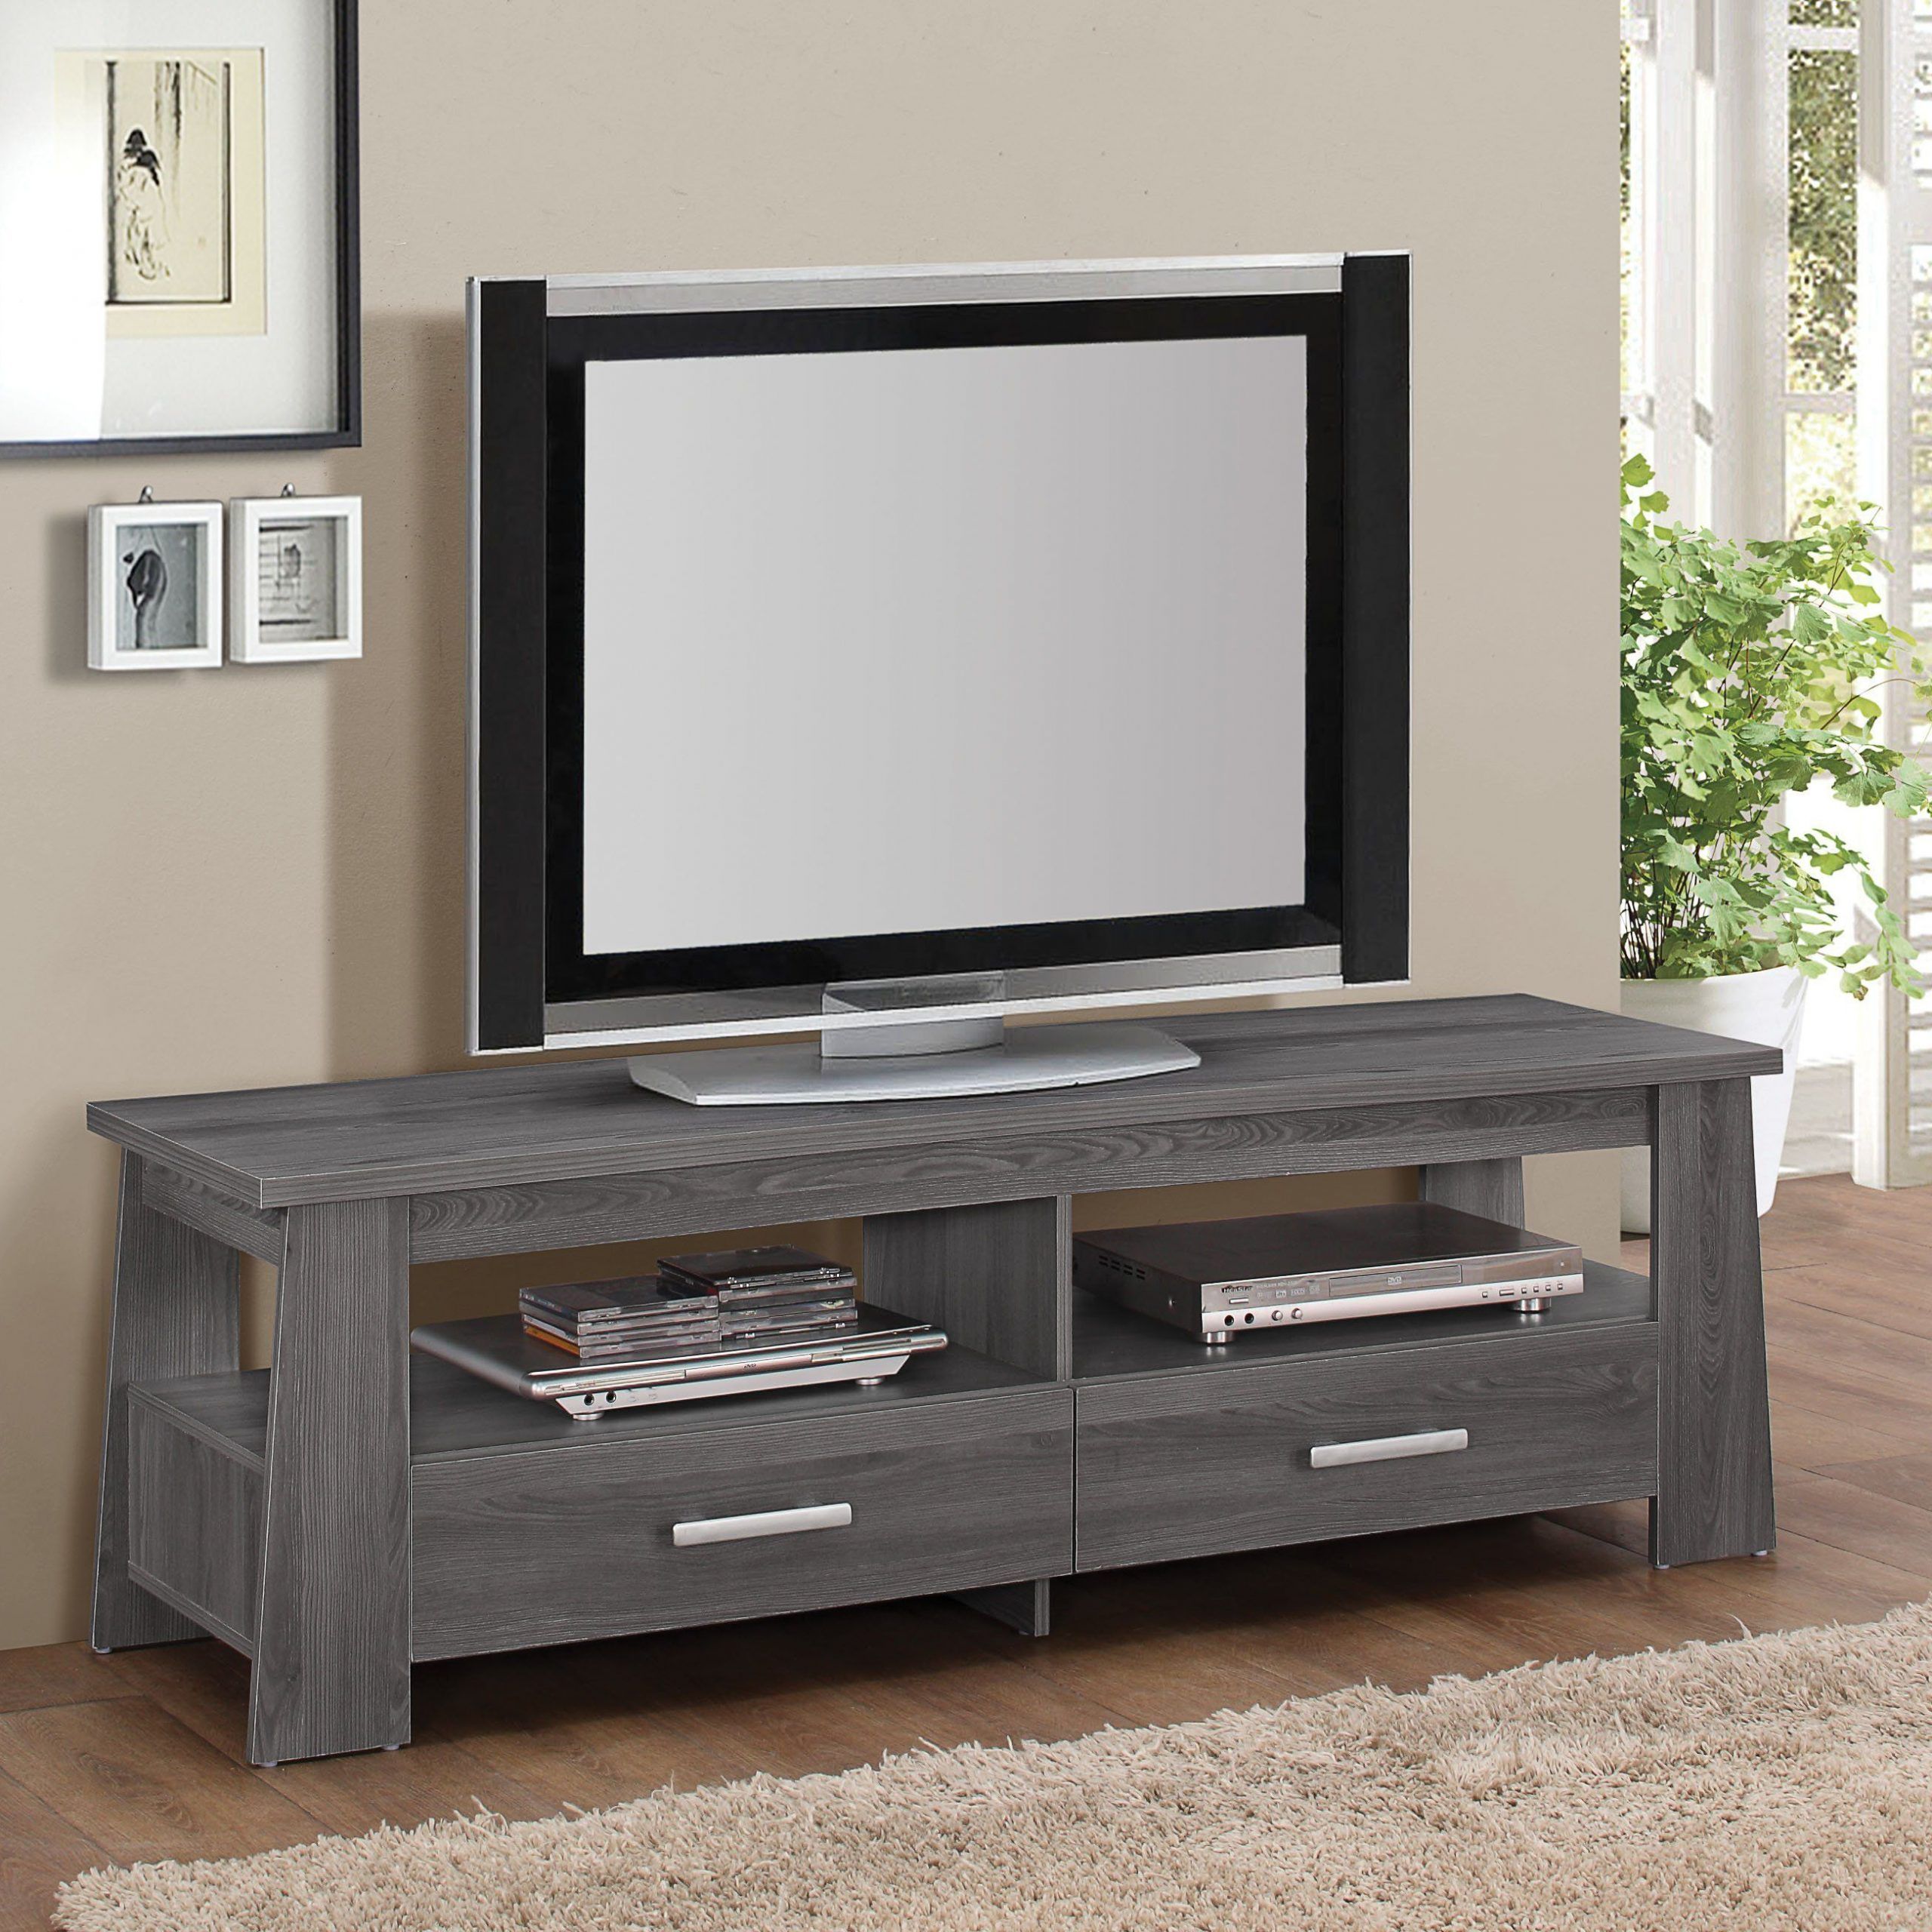 Dark Oak Tv Stands For Flat Screen – Home Ideas For Light Oak Tv Stands Flat Screen (View 3 of 15)